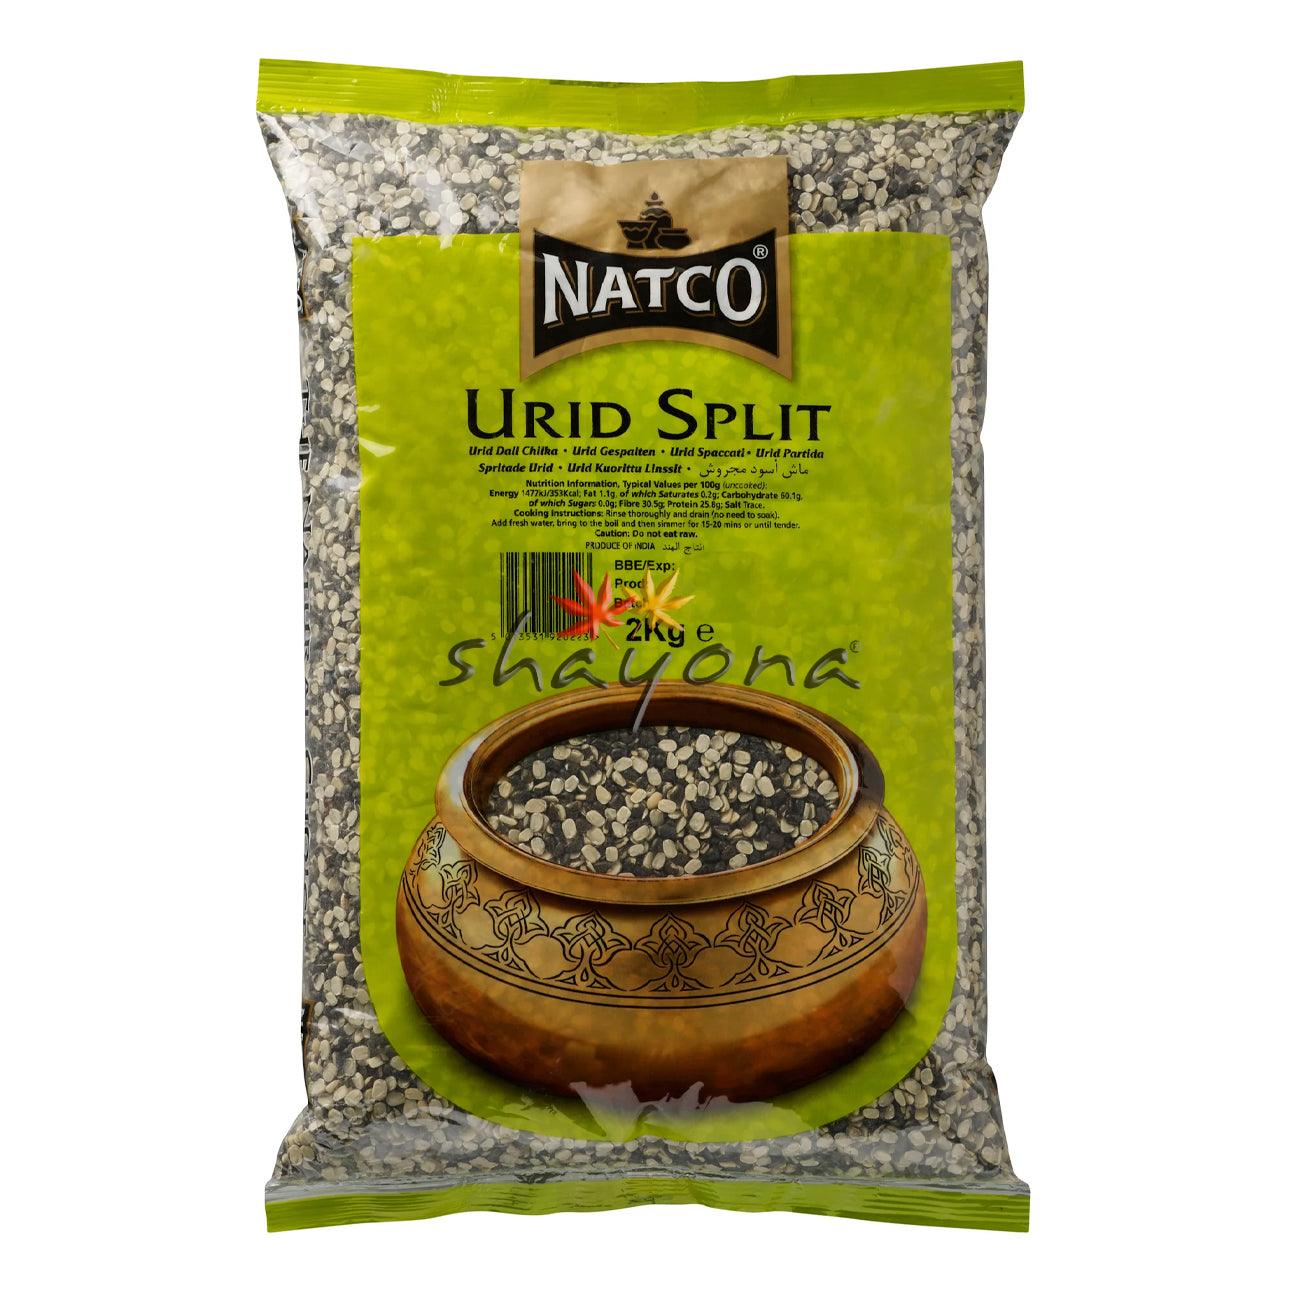 Natco Urid Split - Shayona UK